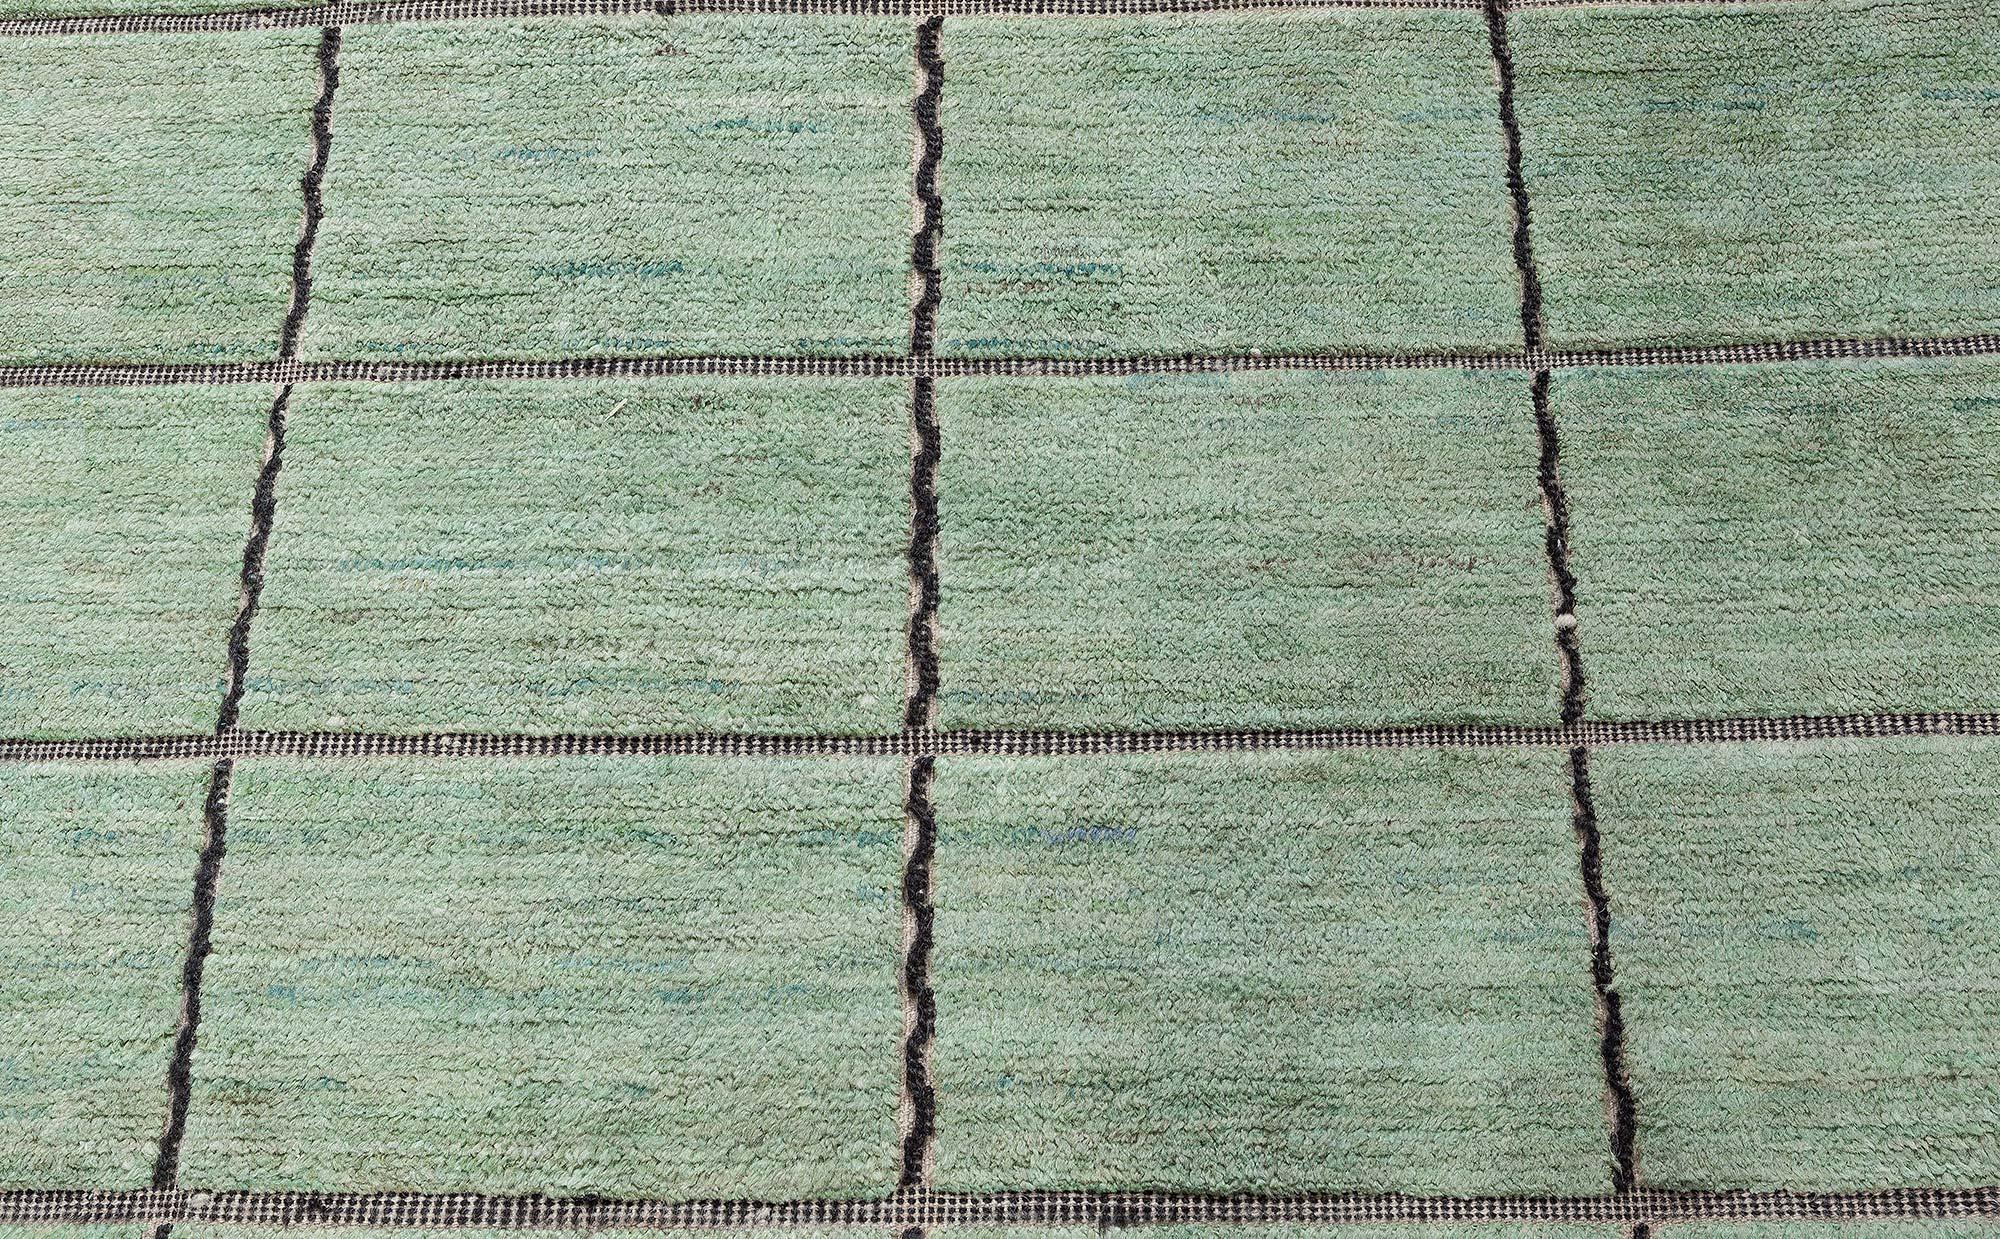  Checkered Swedish Green Half Pile Rug by Doris Leslie Blau
Size: 13'10